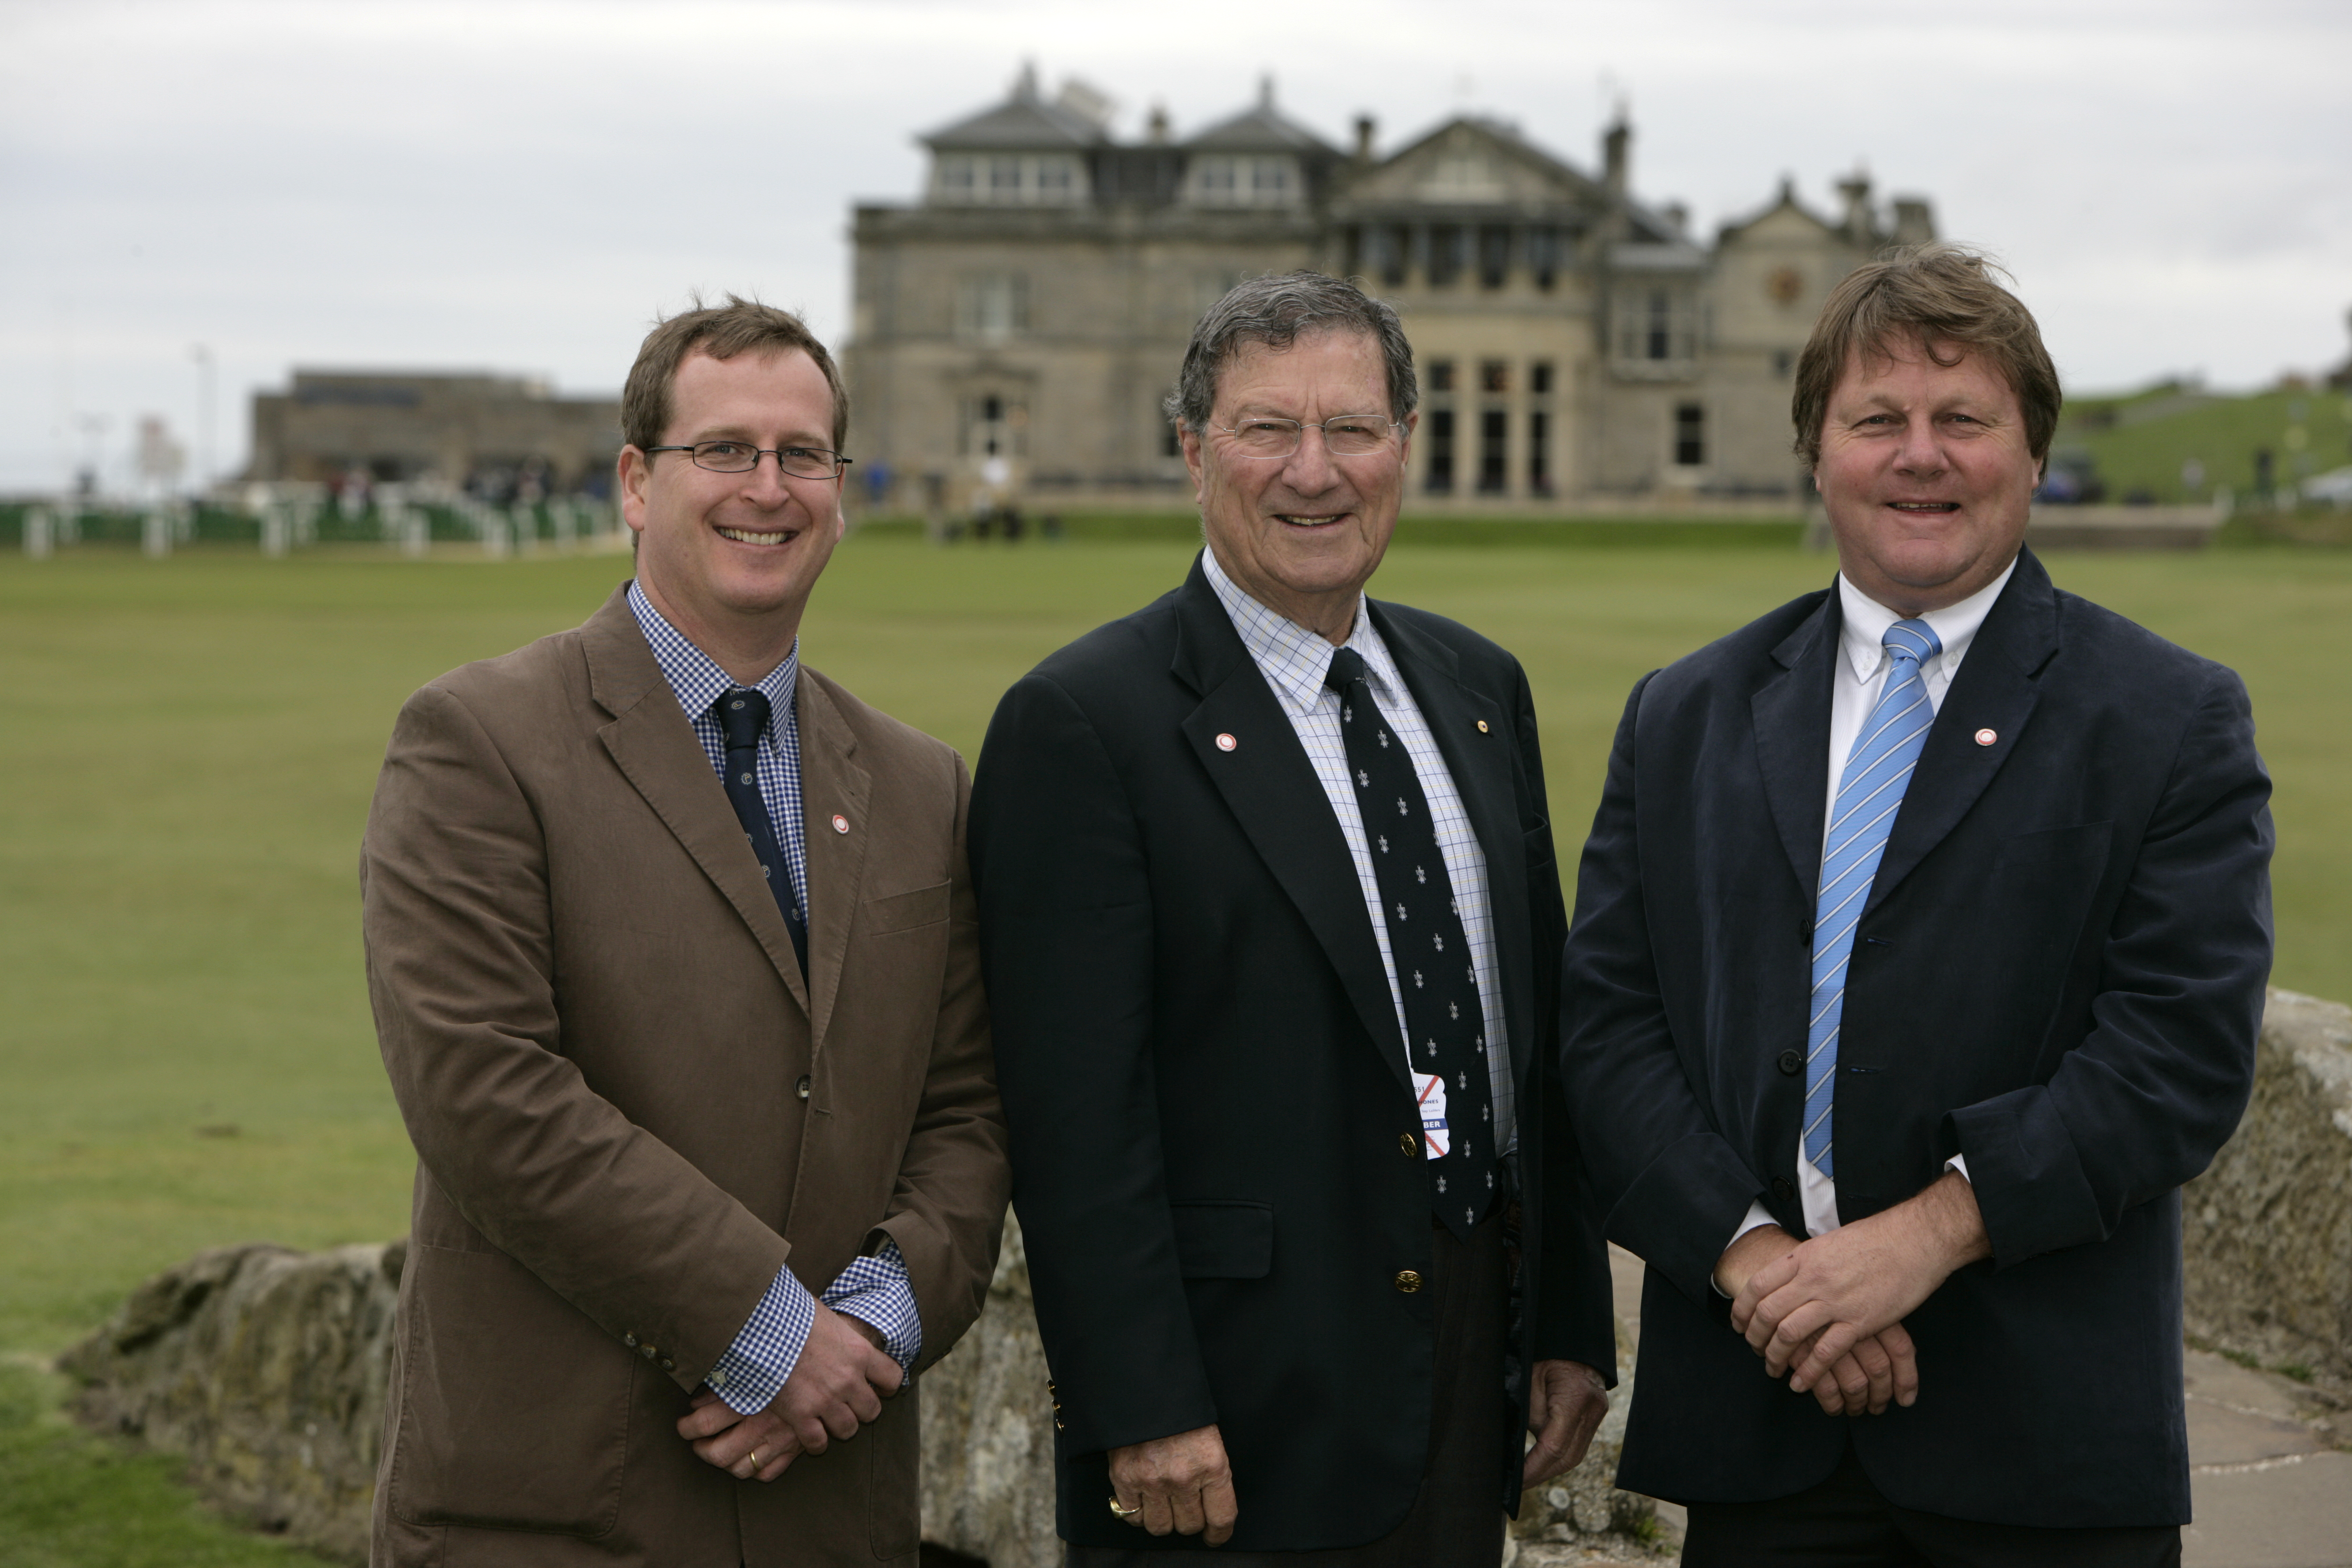 2 Tim Lobb, Peter Thomson, Ross Perrett of Thomson Perrett & Lobb golf course architects